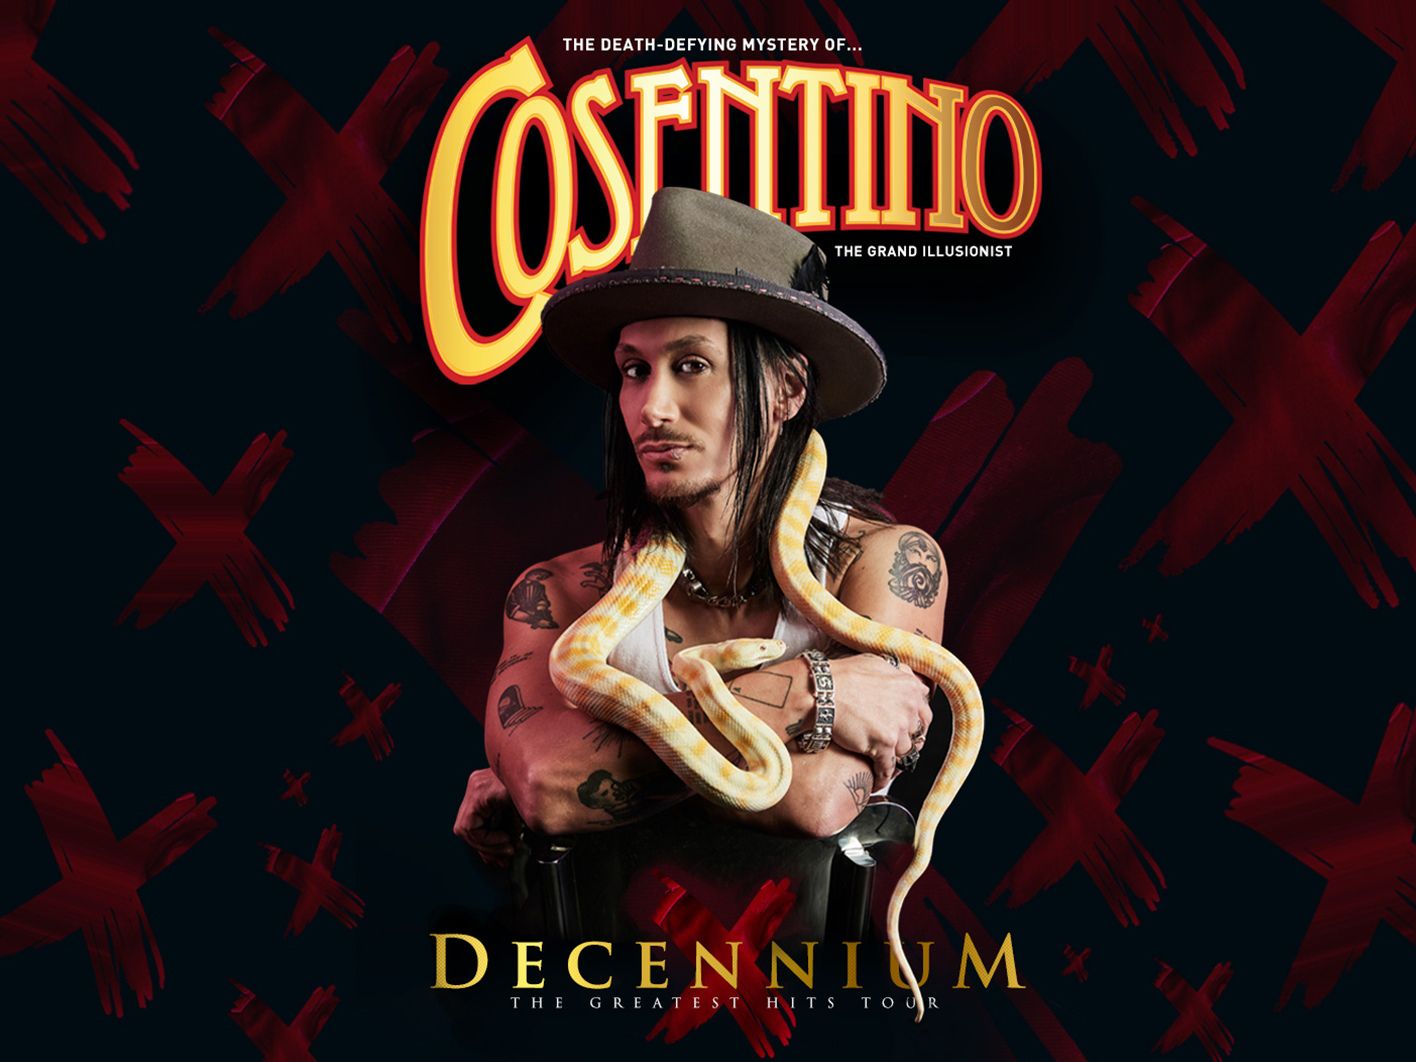 Cosentino brings ‘Decennium the Greatest Hits Tour’ to Gladstone